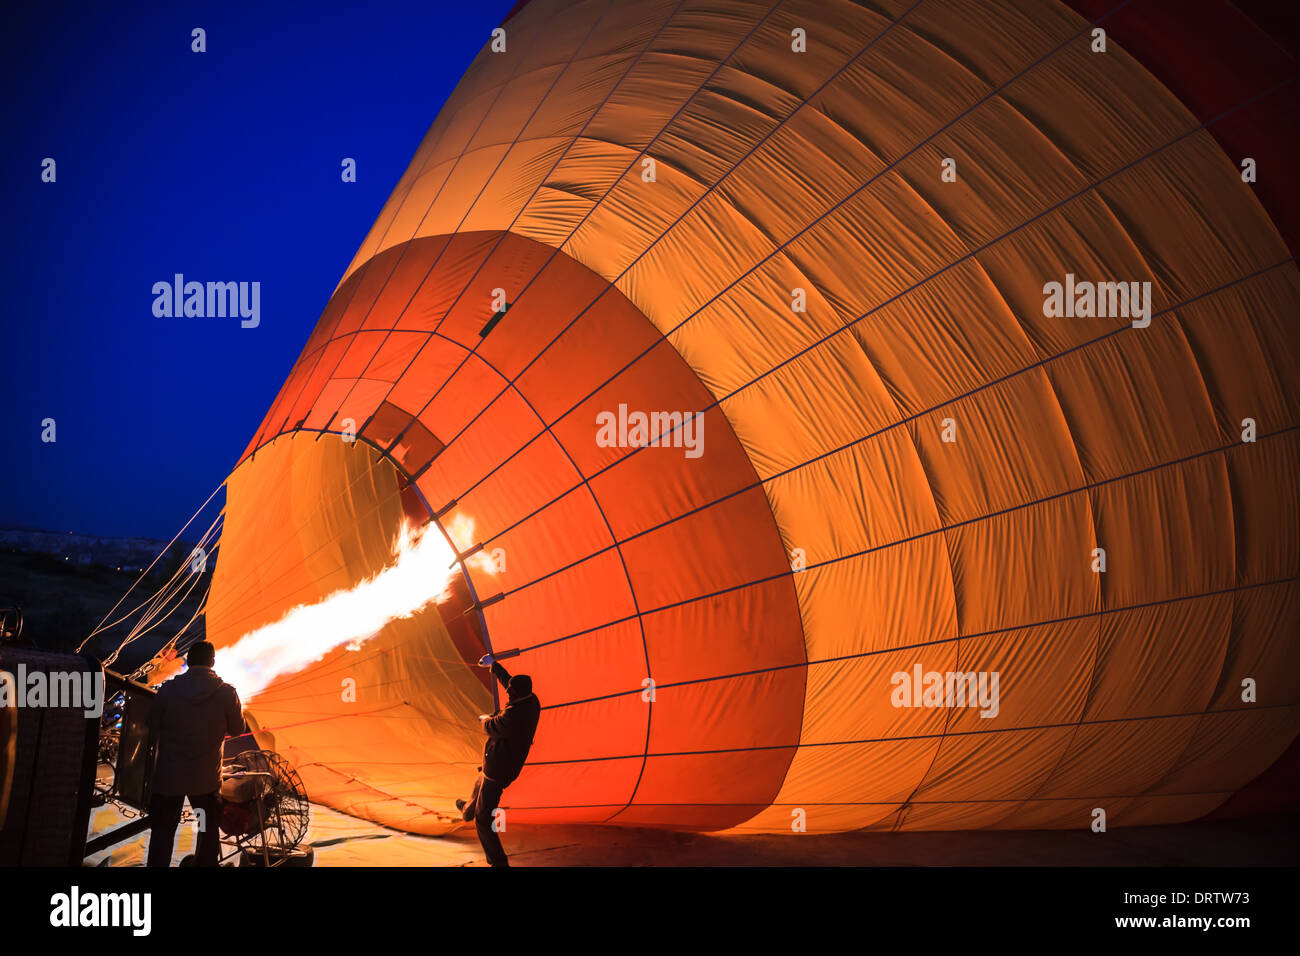 Inflation of hot air balloon in cappadocia, turkey Stock Photo